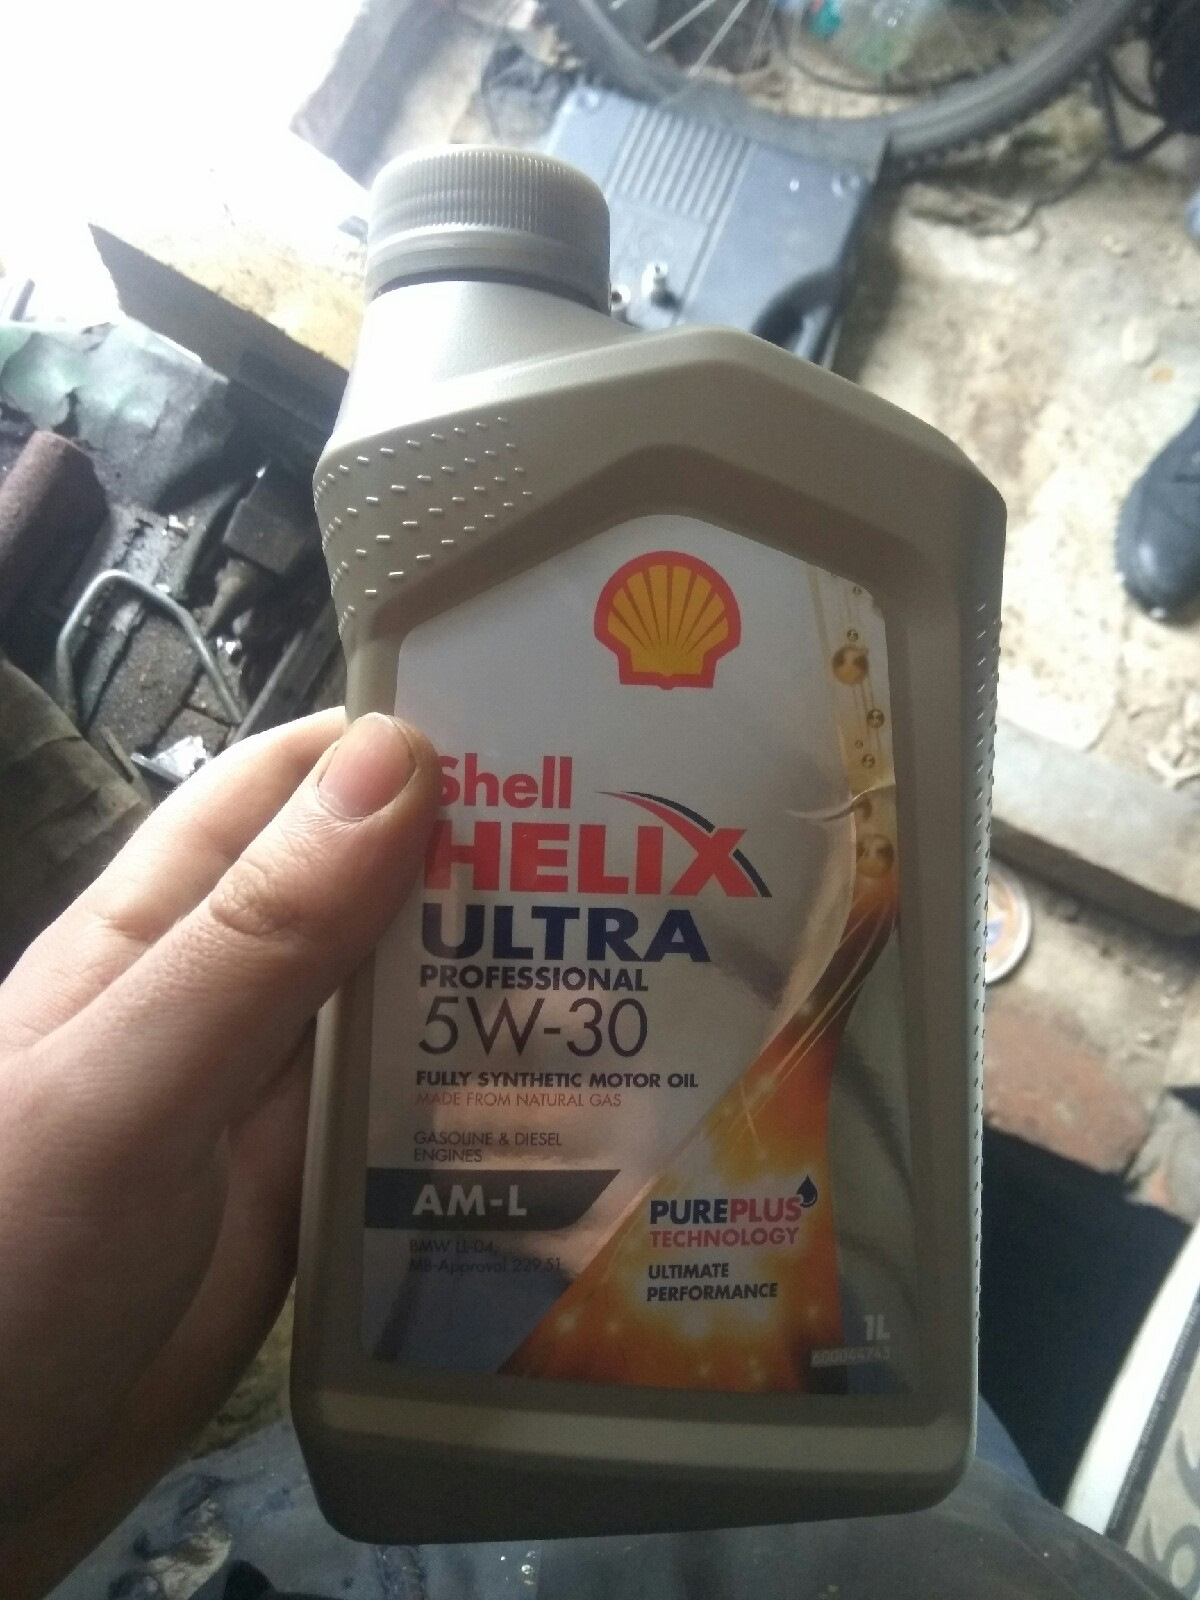 Shell ultra am l. Масло Shell Helix Ultra 5w30 am-l. Shell Helix Ultra professional am-l 5w-30. Масло Шелл Хеликс ультра 5w30 для Хендай Солярис. 550046352 Shell.